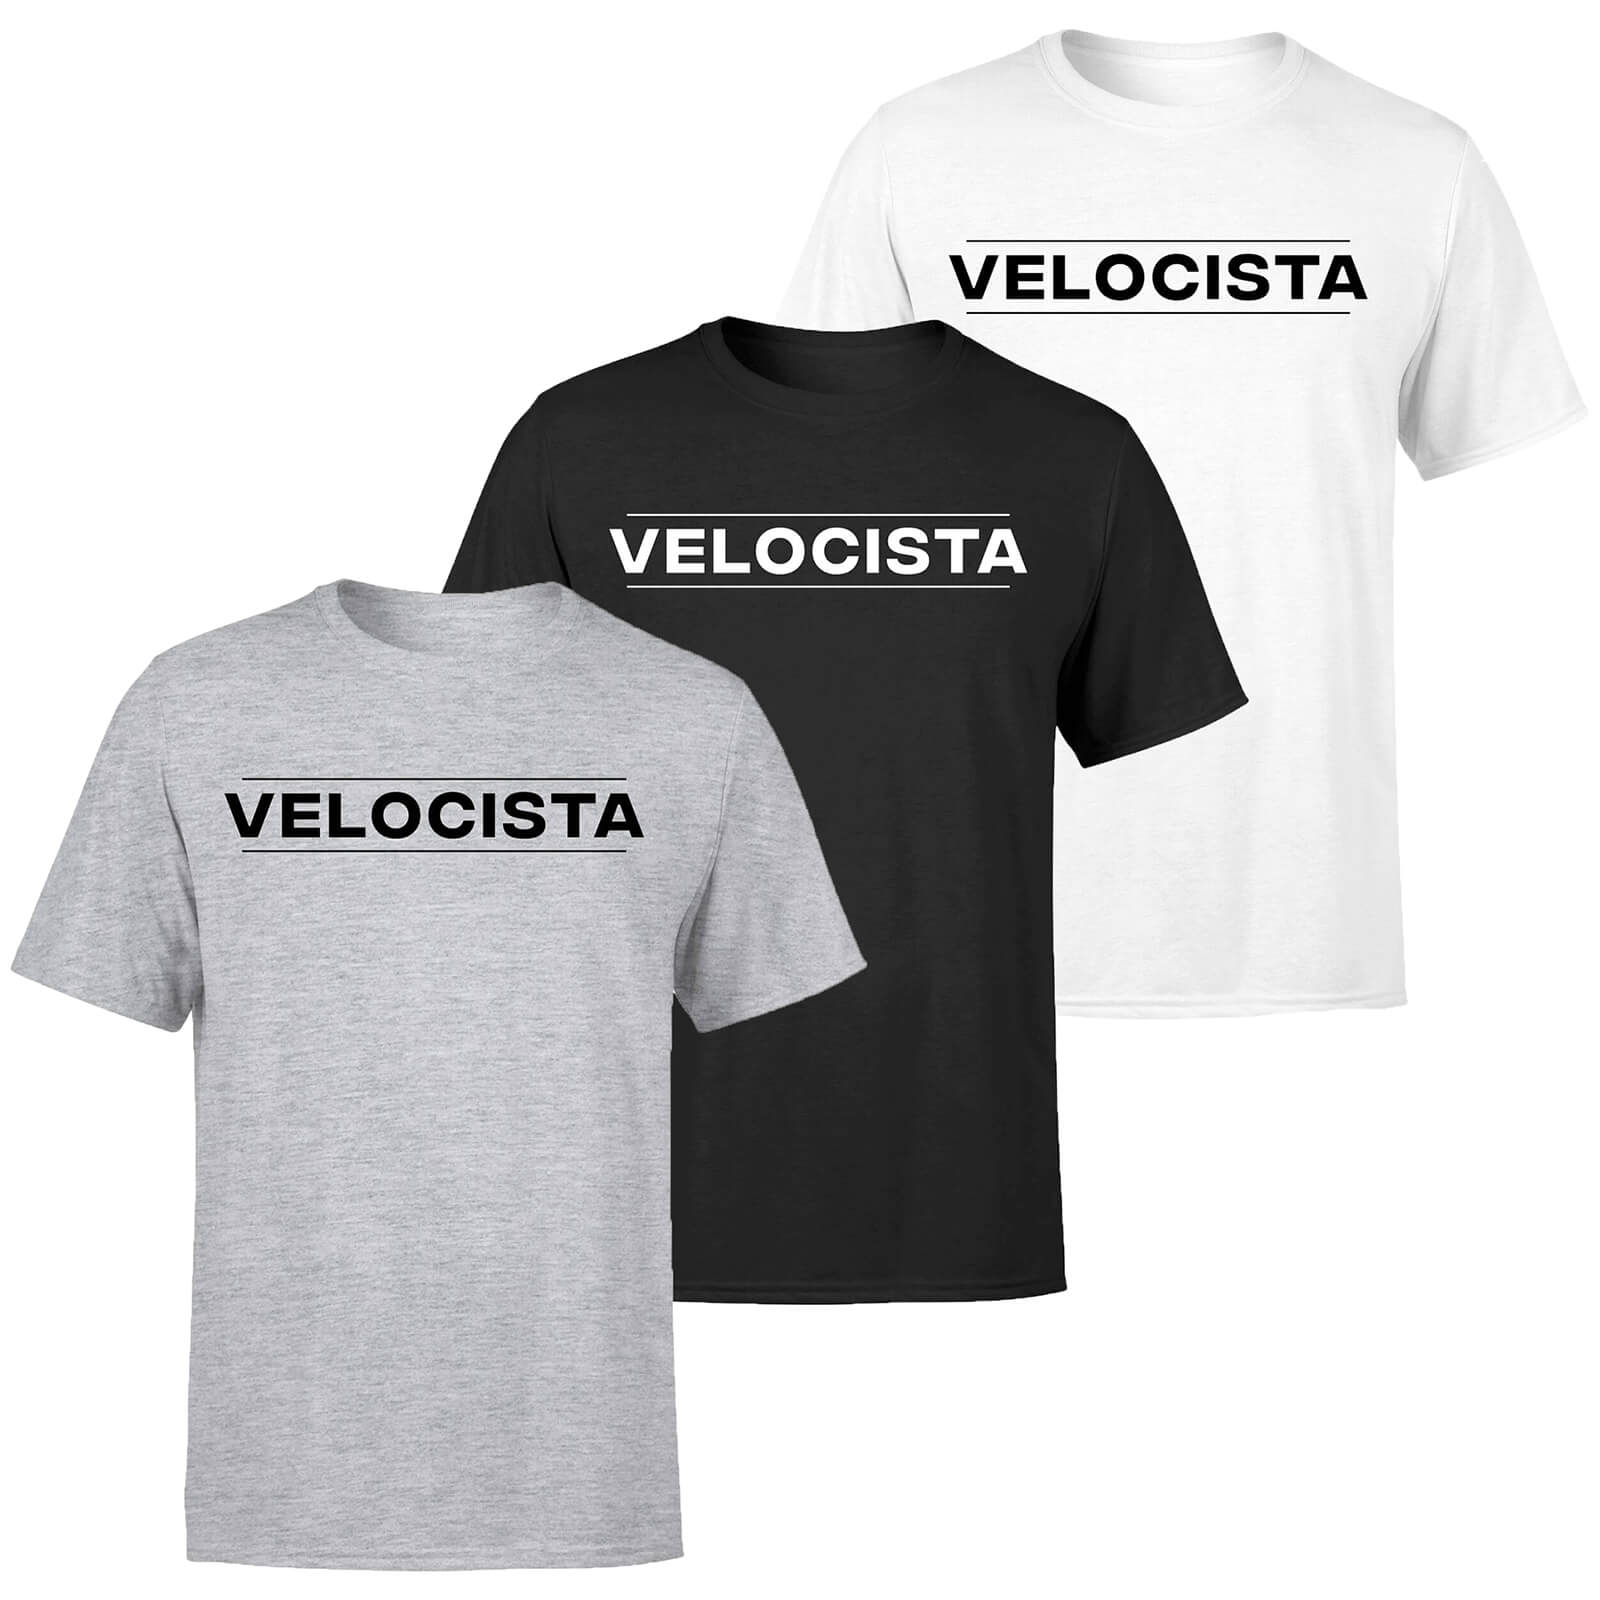 Velocista Men's T-Shirt - M - Black